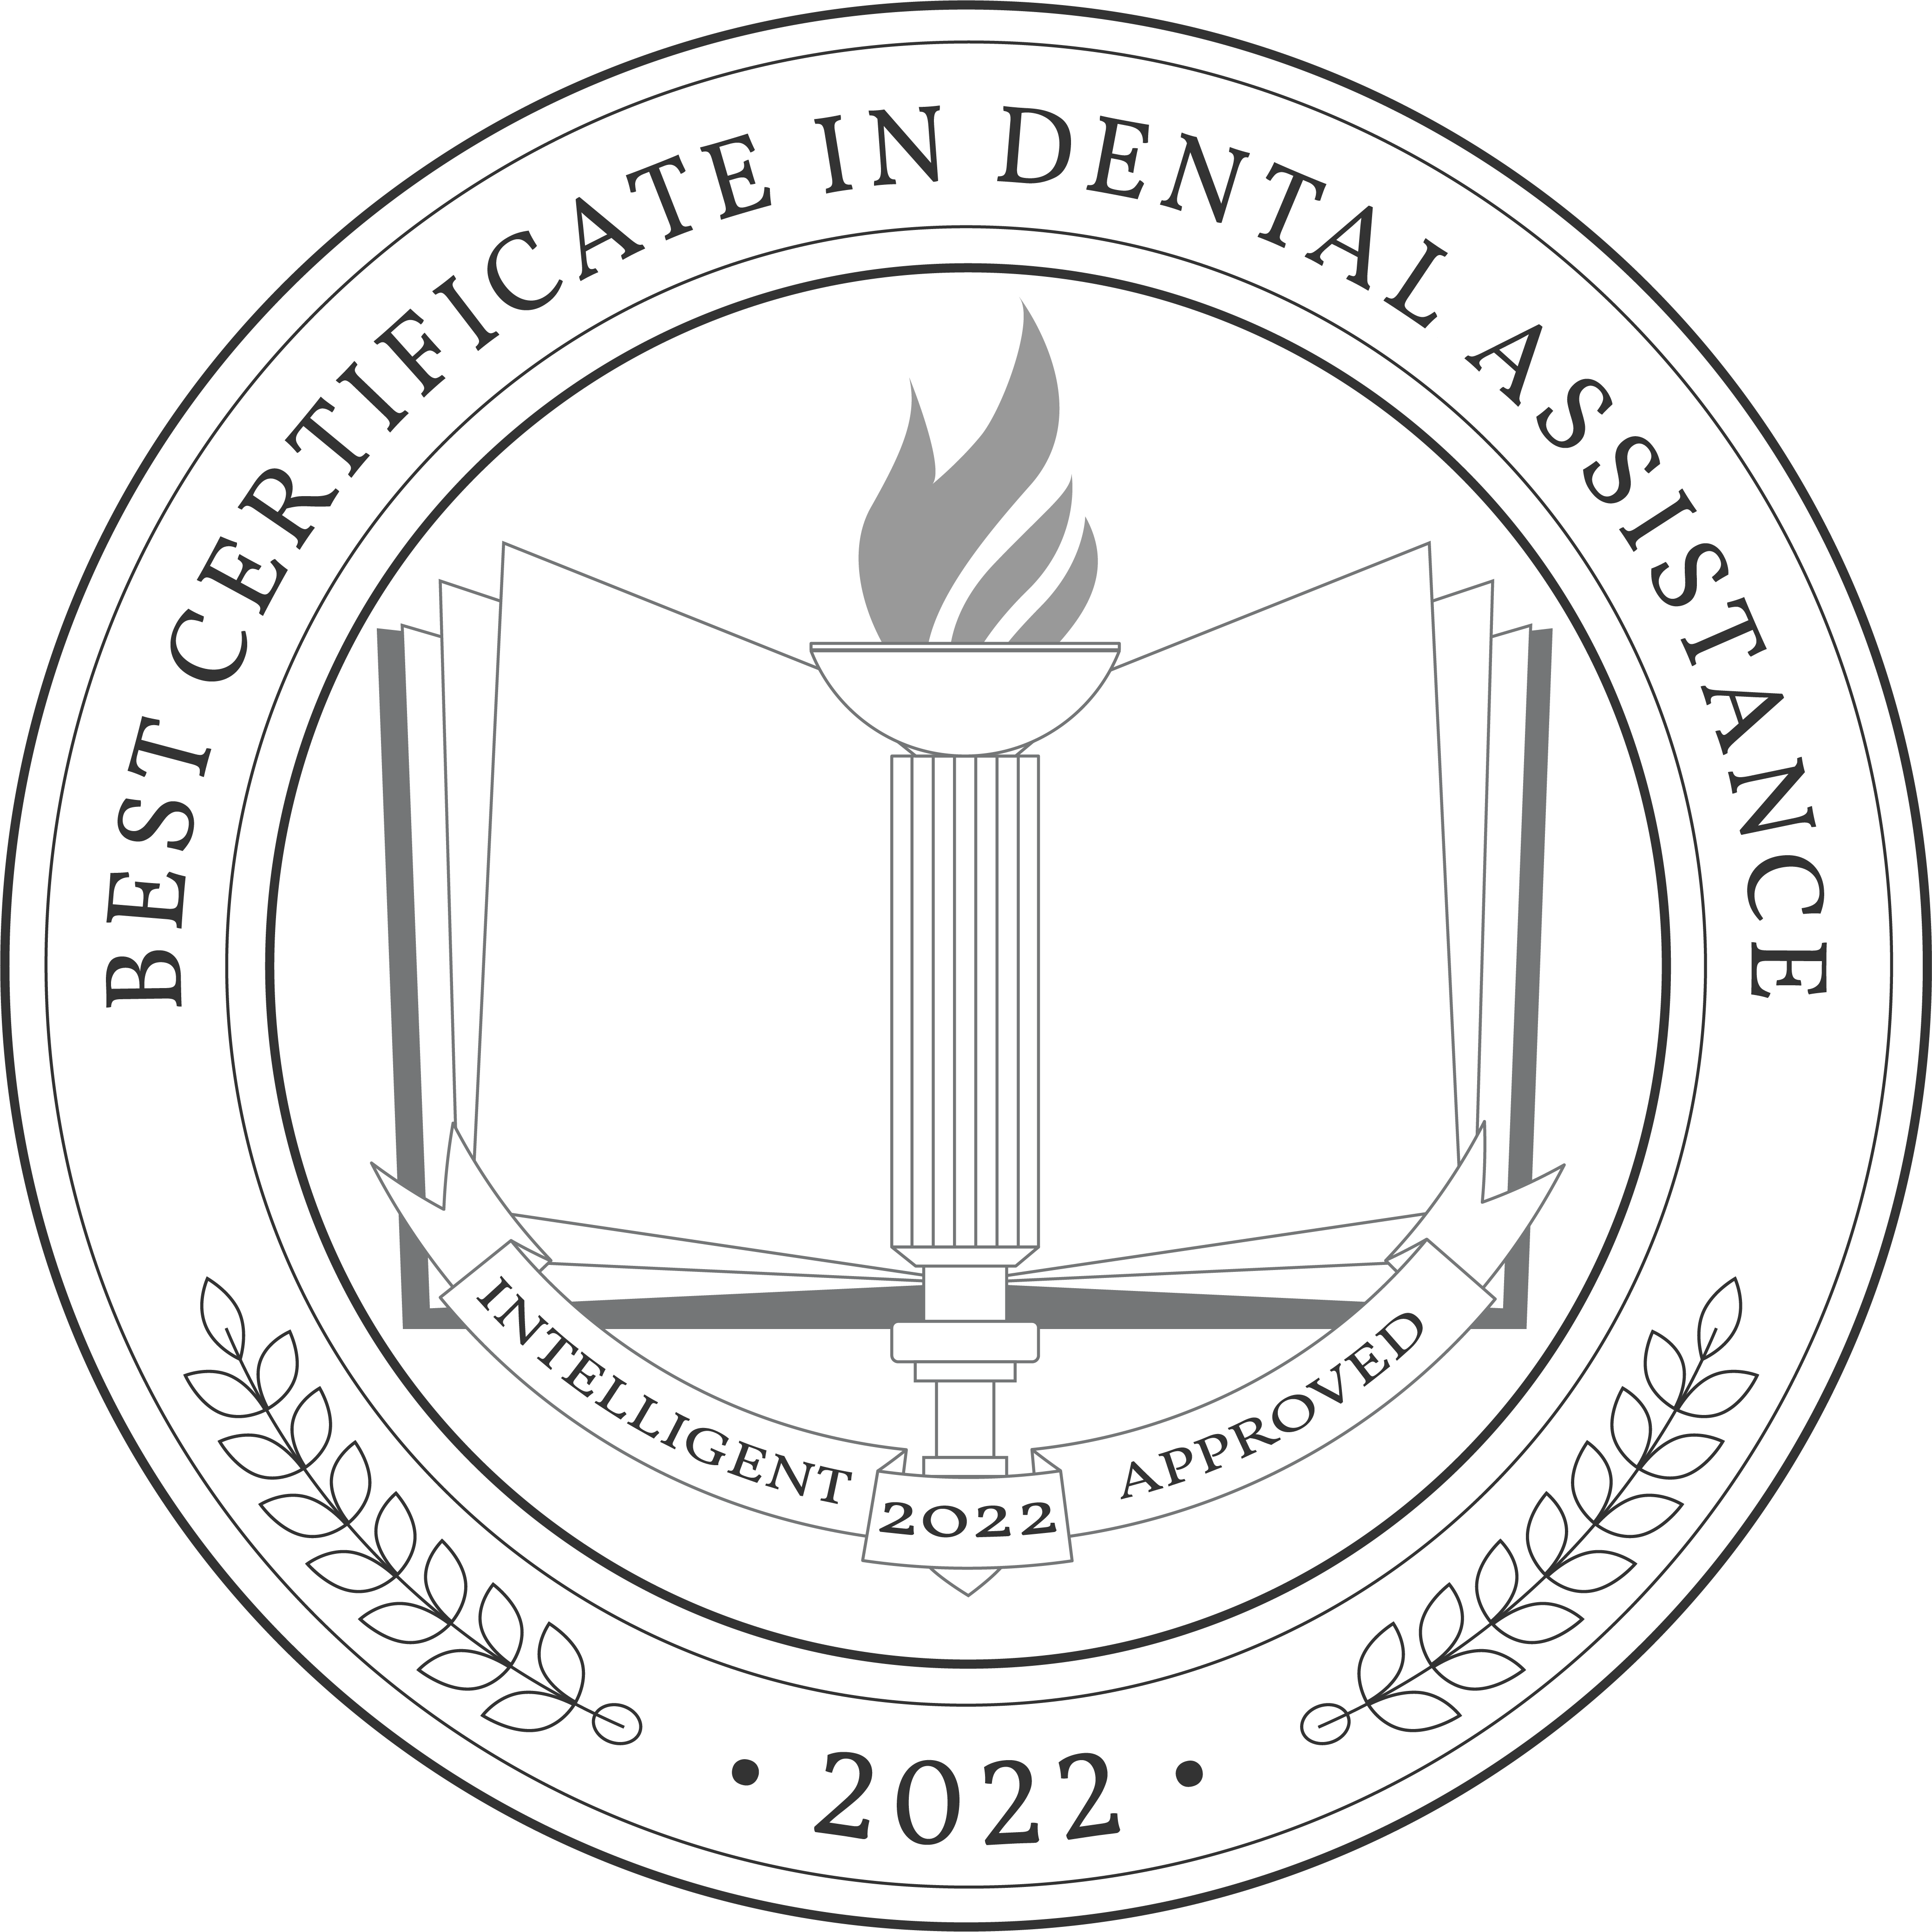 Best Certificate in Dental Assistance Badge